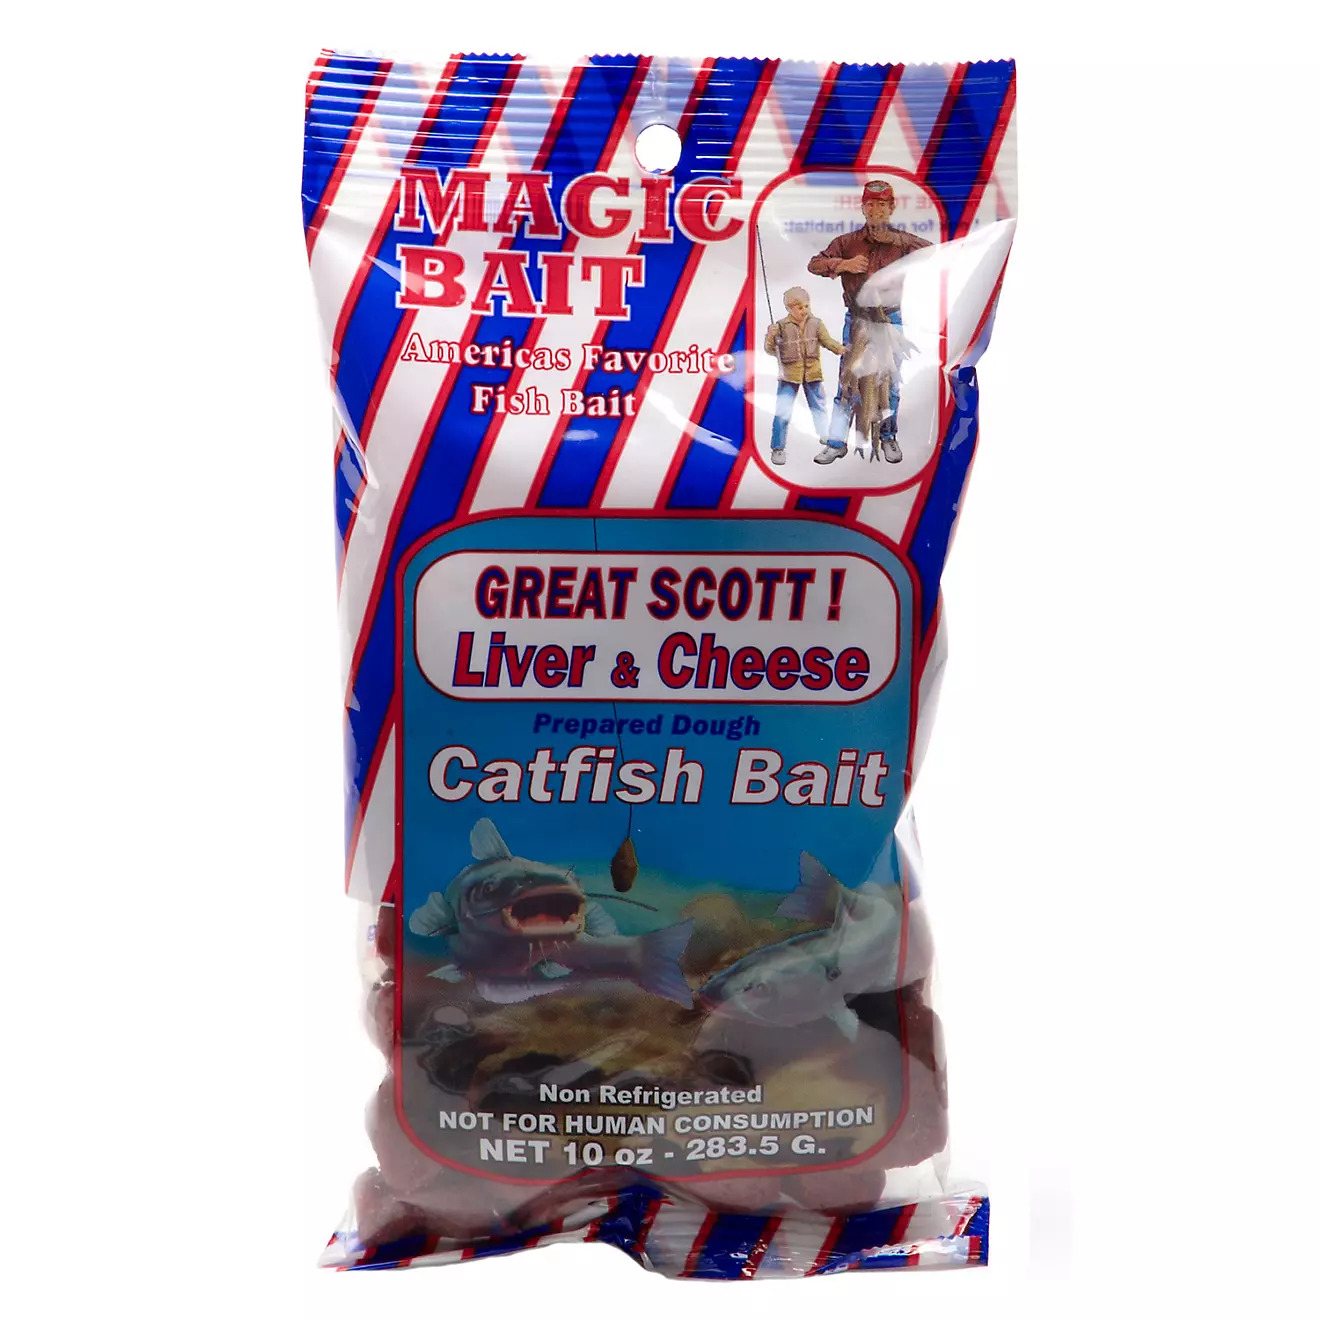 https://saffordtrading.com/wp-content/uploads/2020/07/Magic-Bait-Great-Scott-10-Oz-Liver-and-Cheese-Catfish-Bait-MAGICCHEESE.webp